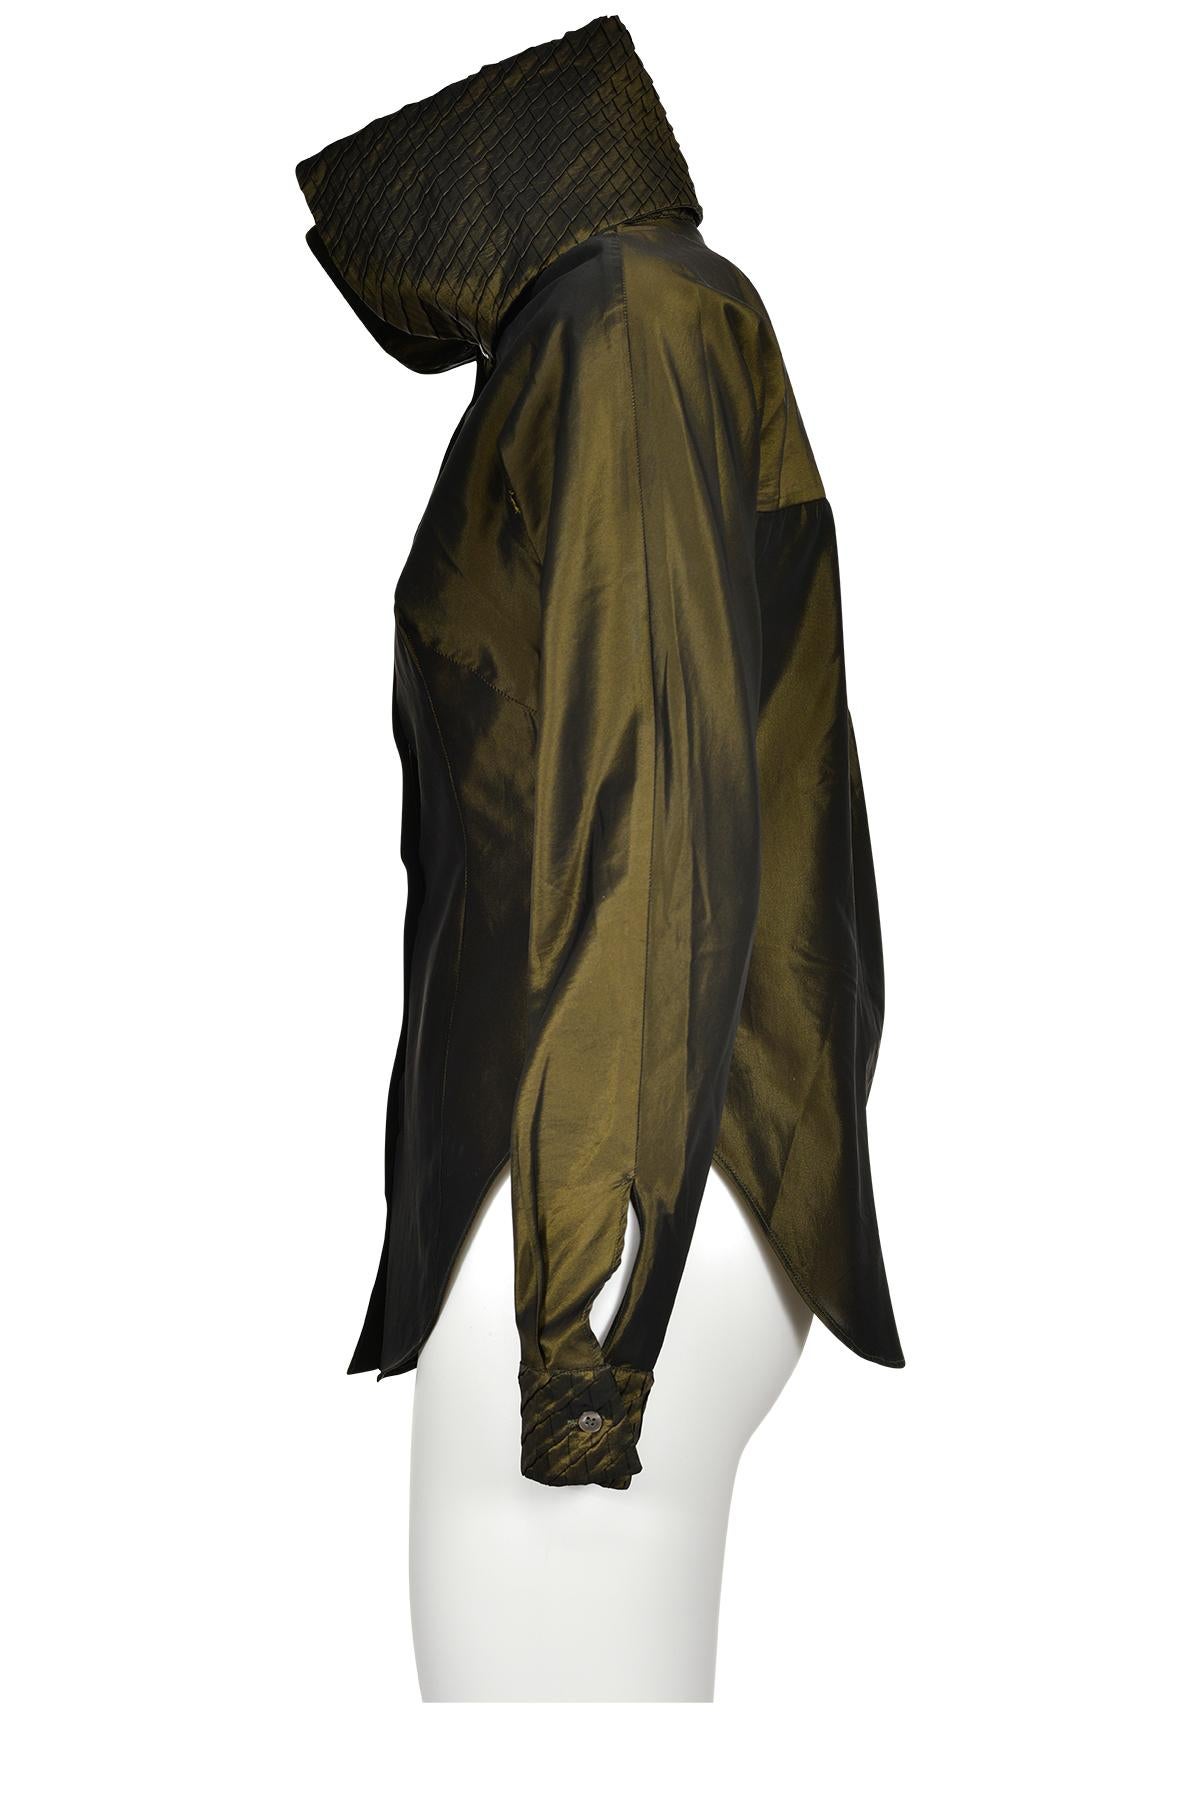 ALEXANDER MCQUEEN SS 97 Iridescent Taffeta Suit In Excellent Condition For Sale In Milano, MILANO